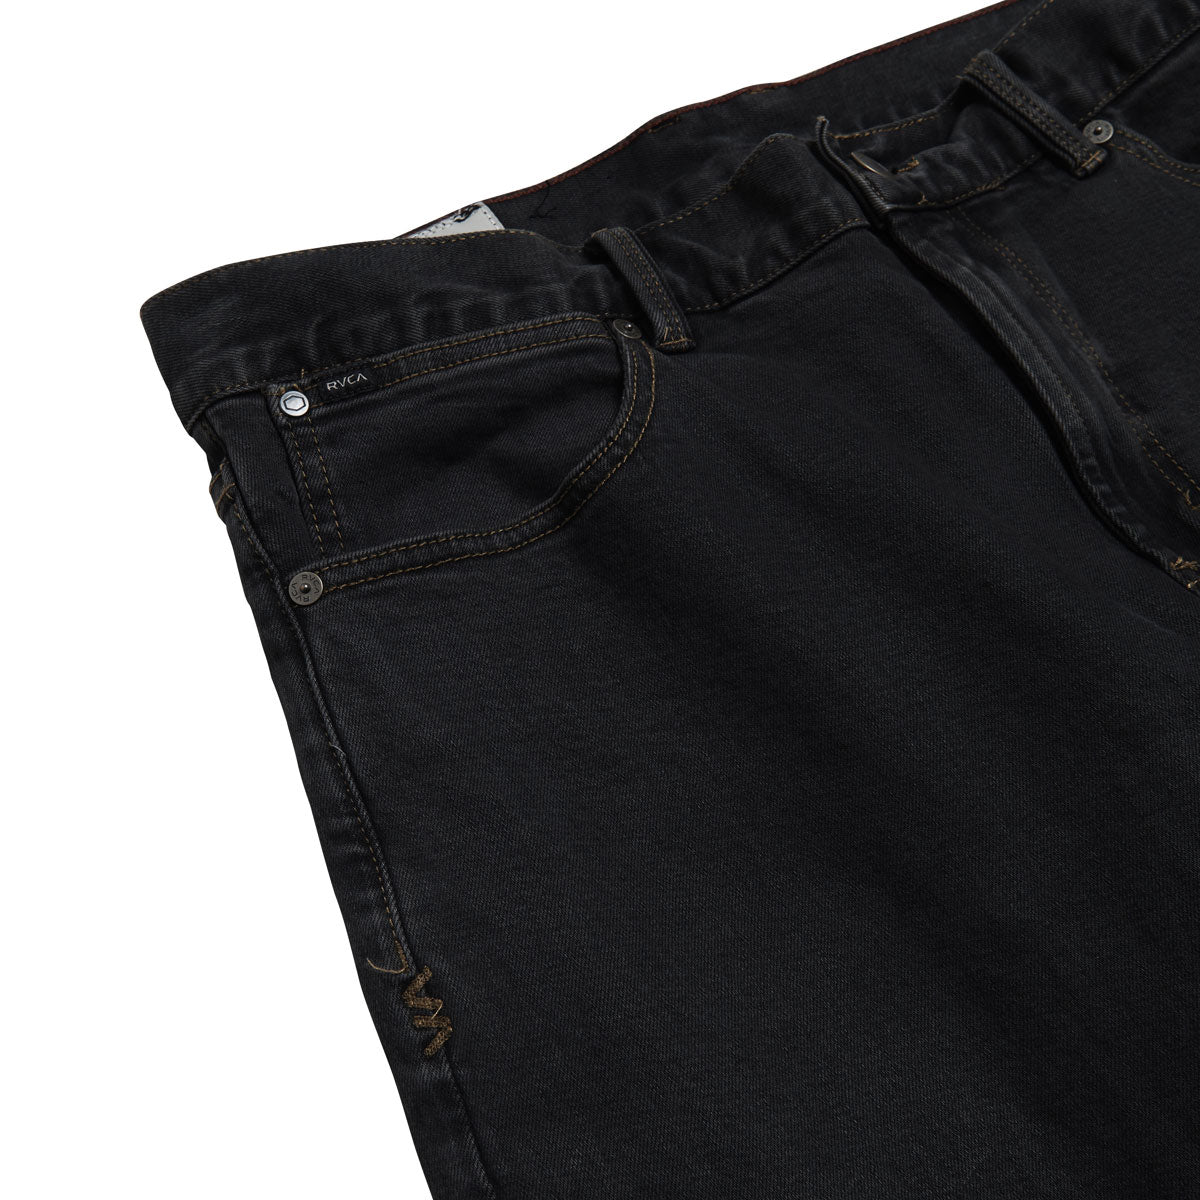 RVCA Weekend Anp Denim Jeans - Black Overdye image 3